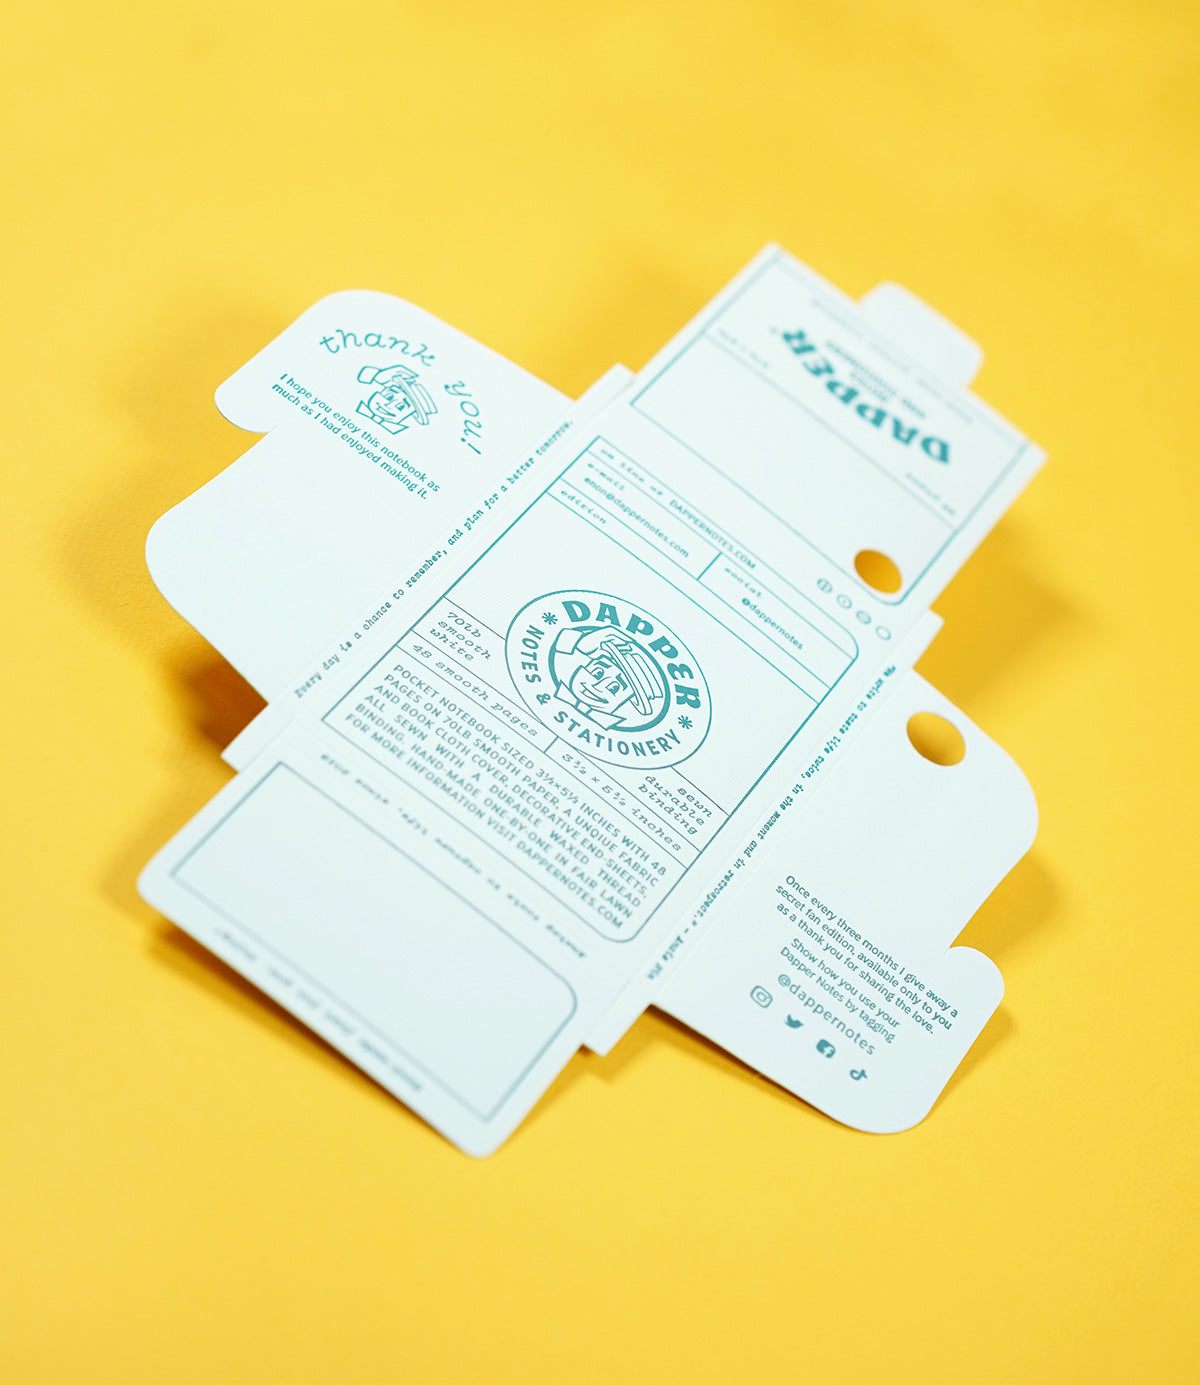 mamas sauce paper packaging dieline for dapper notes letterpress notebook packaging